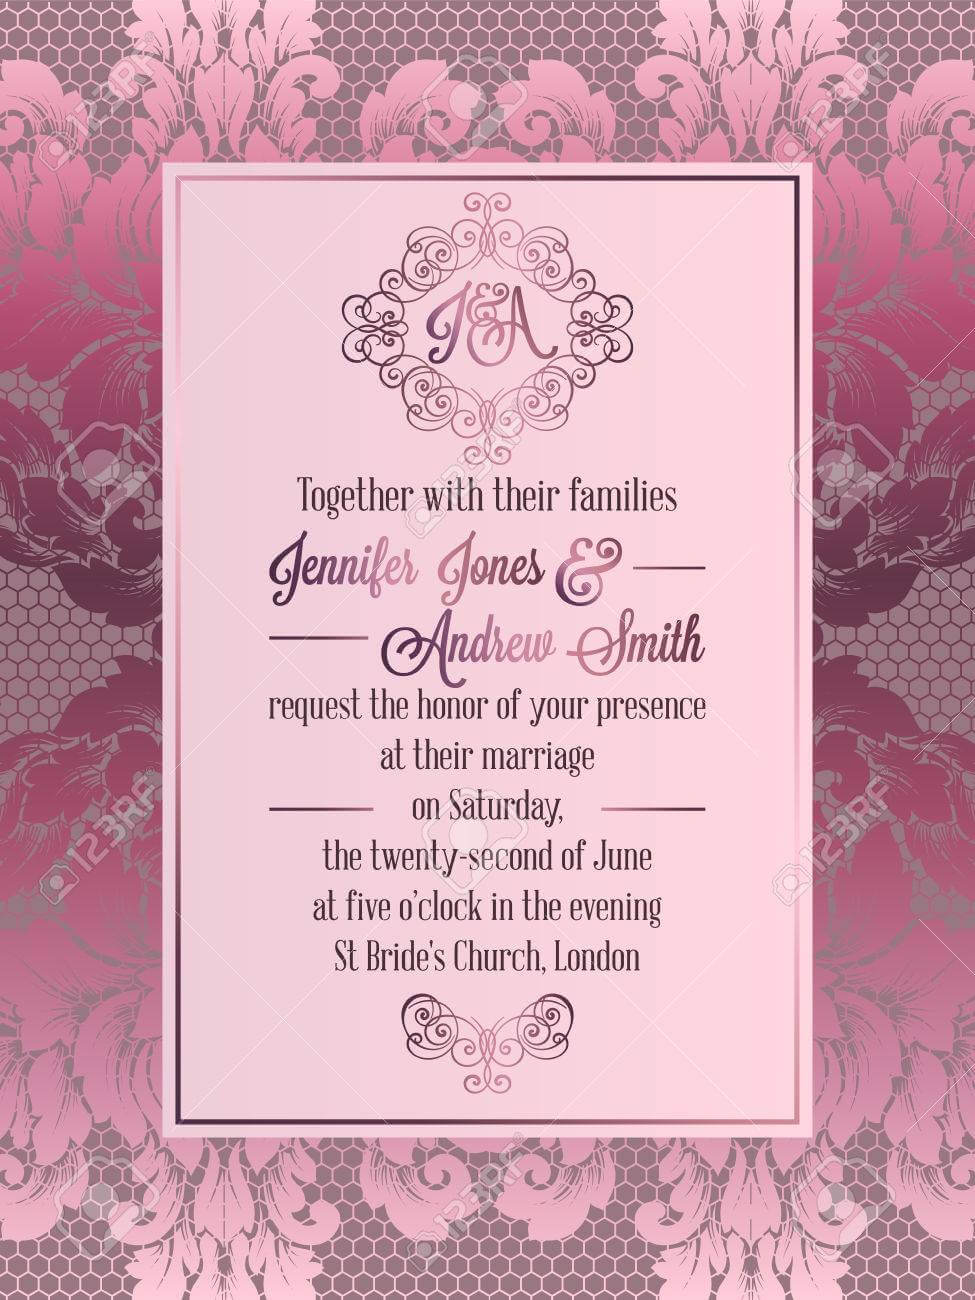 Vintage Baroque Style Wedding Invitation Card Template.. Elegant.. Within Church Wedding Invitation Card Template